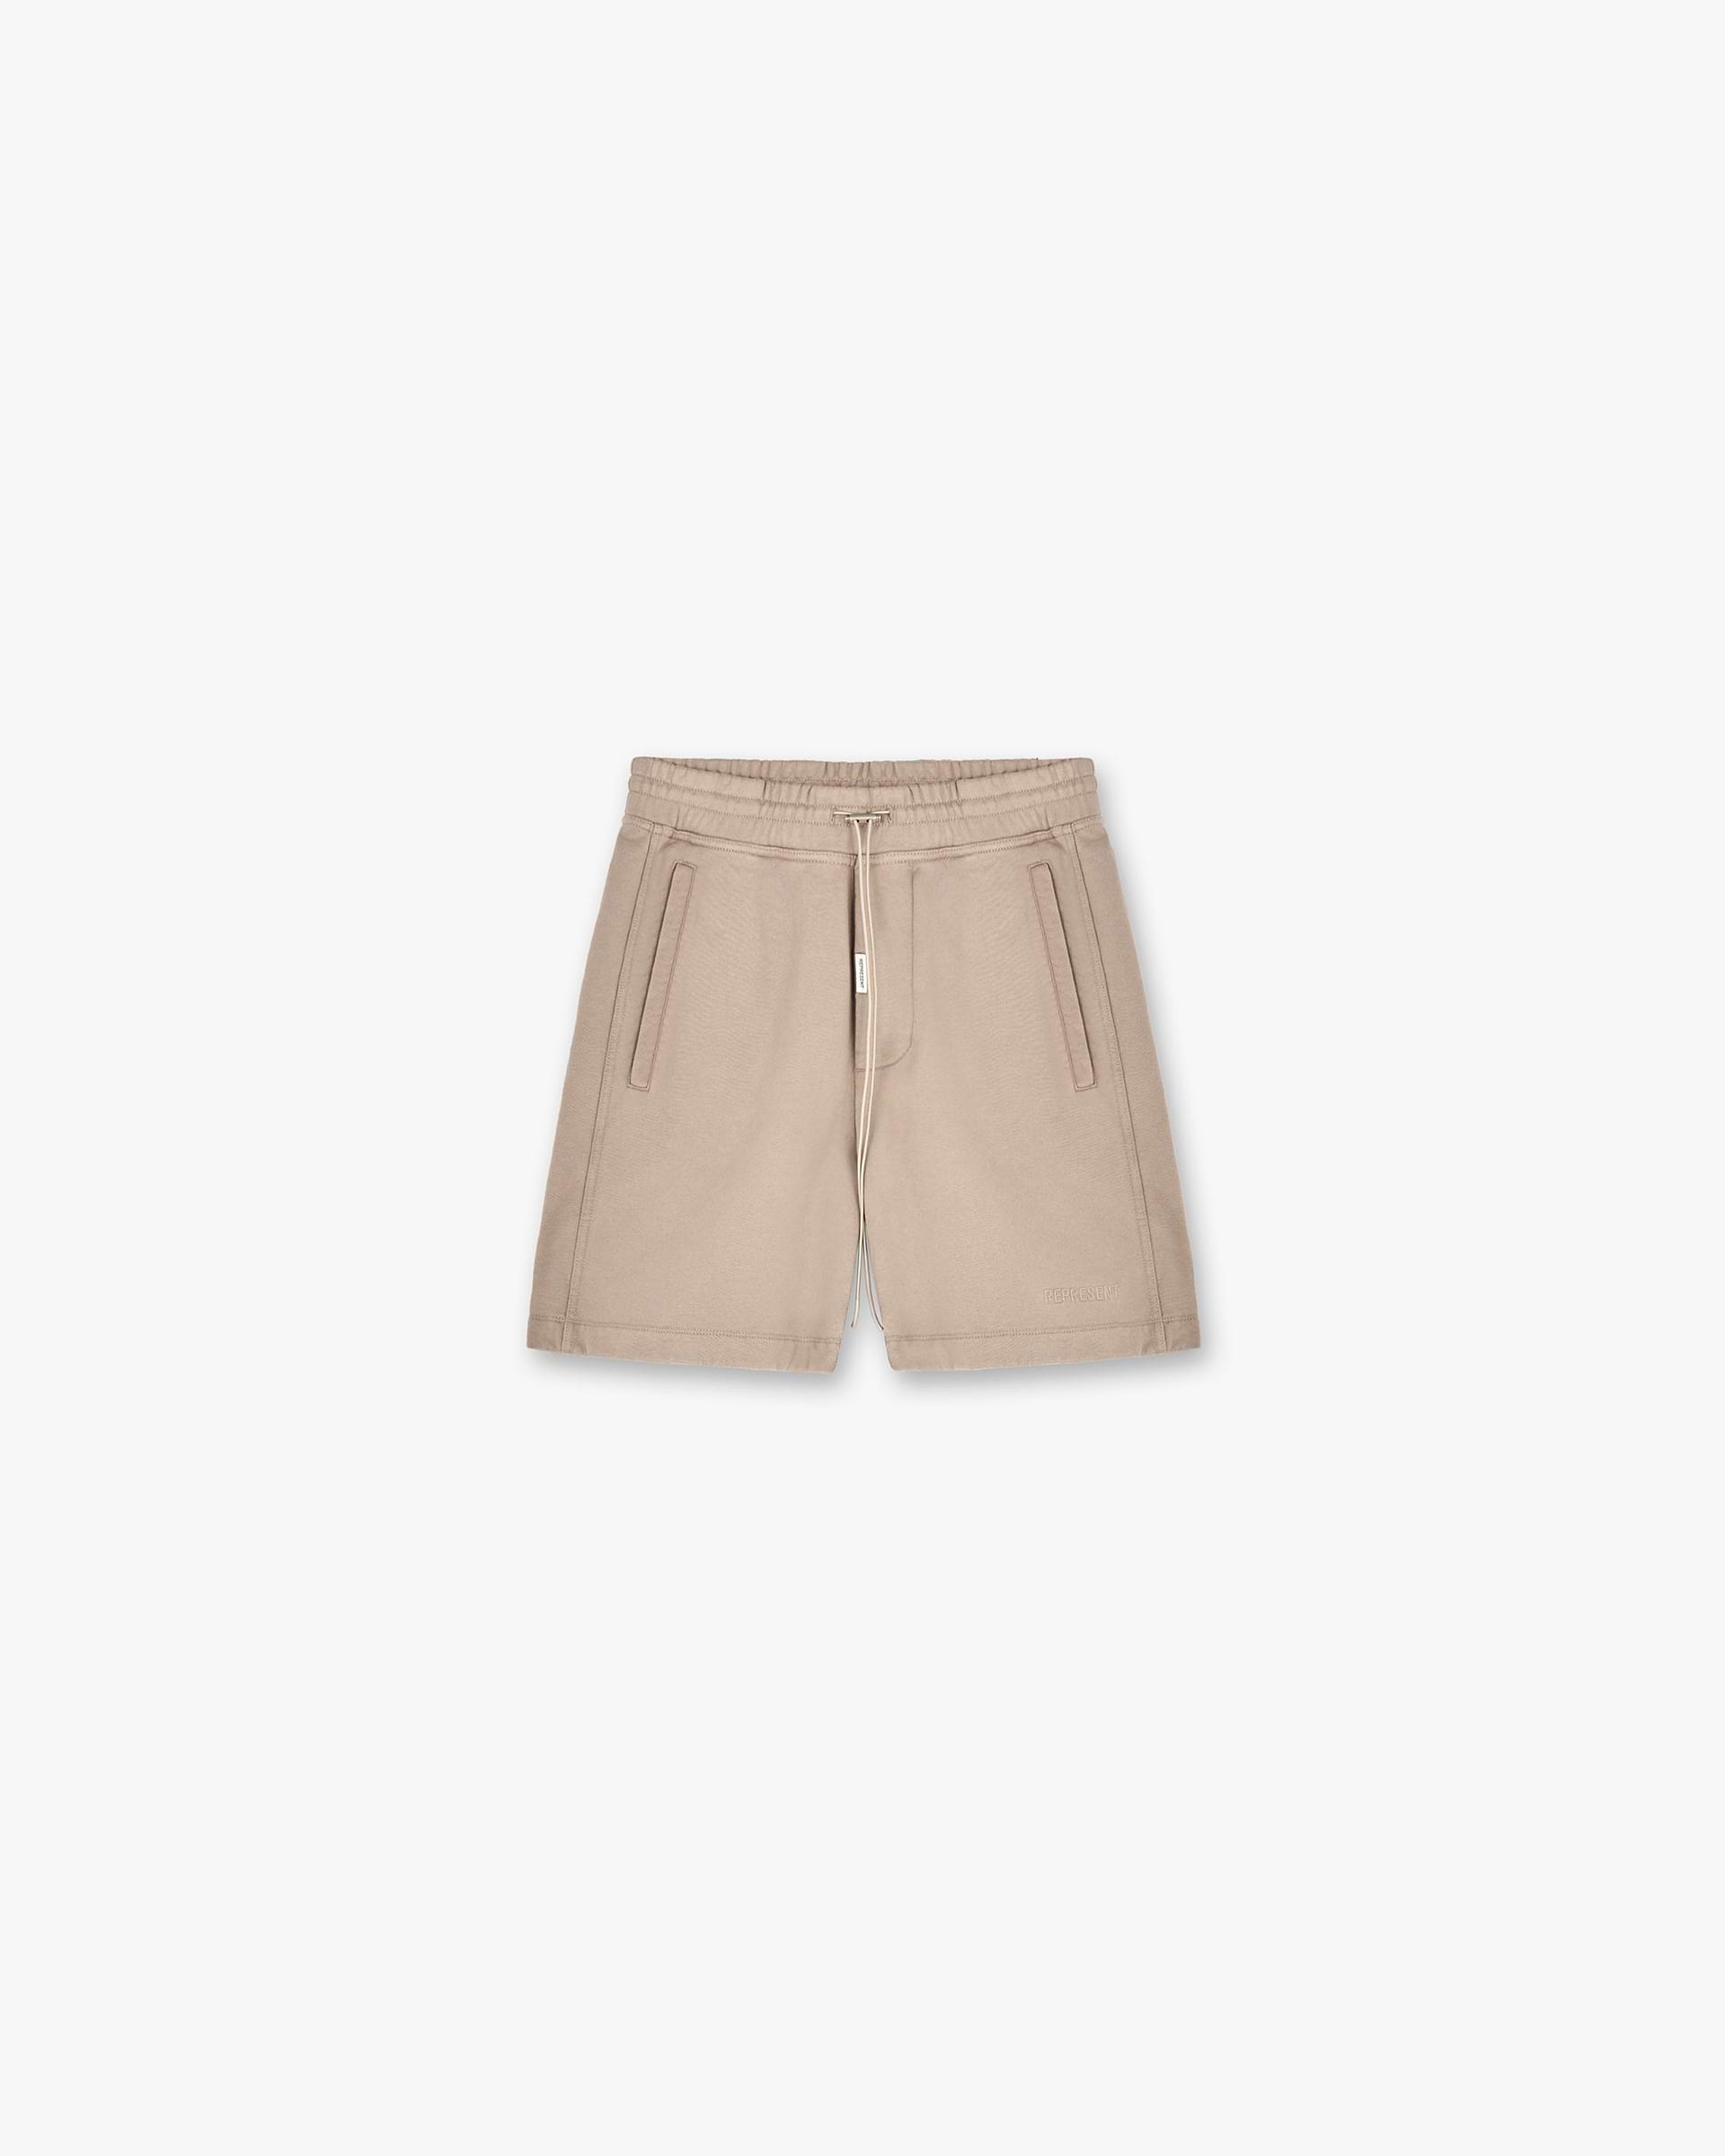 Blank Shorts | Taupe Shorts BLANKS | Represent Clo